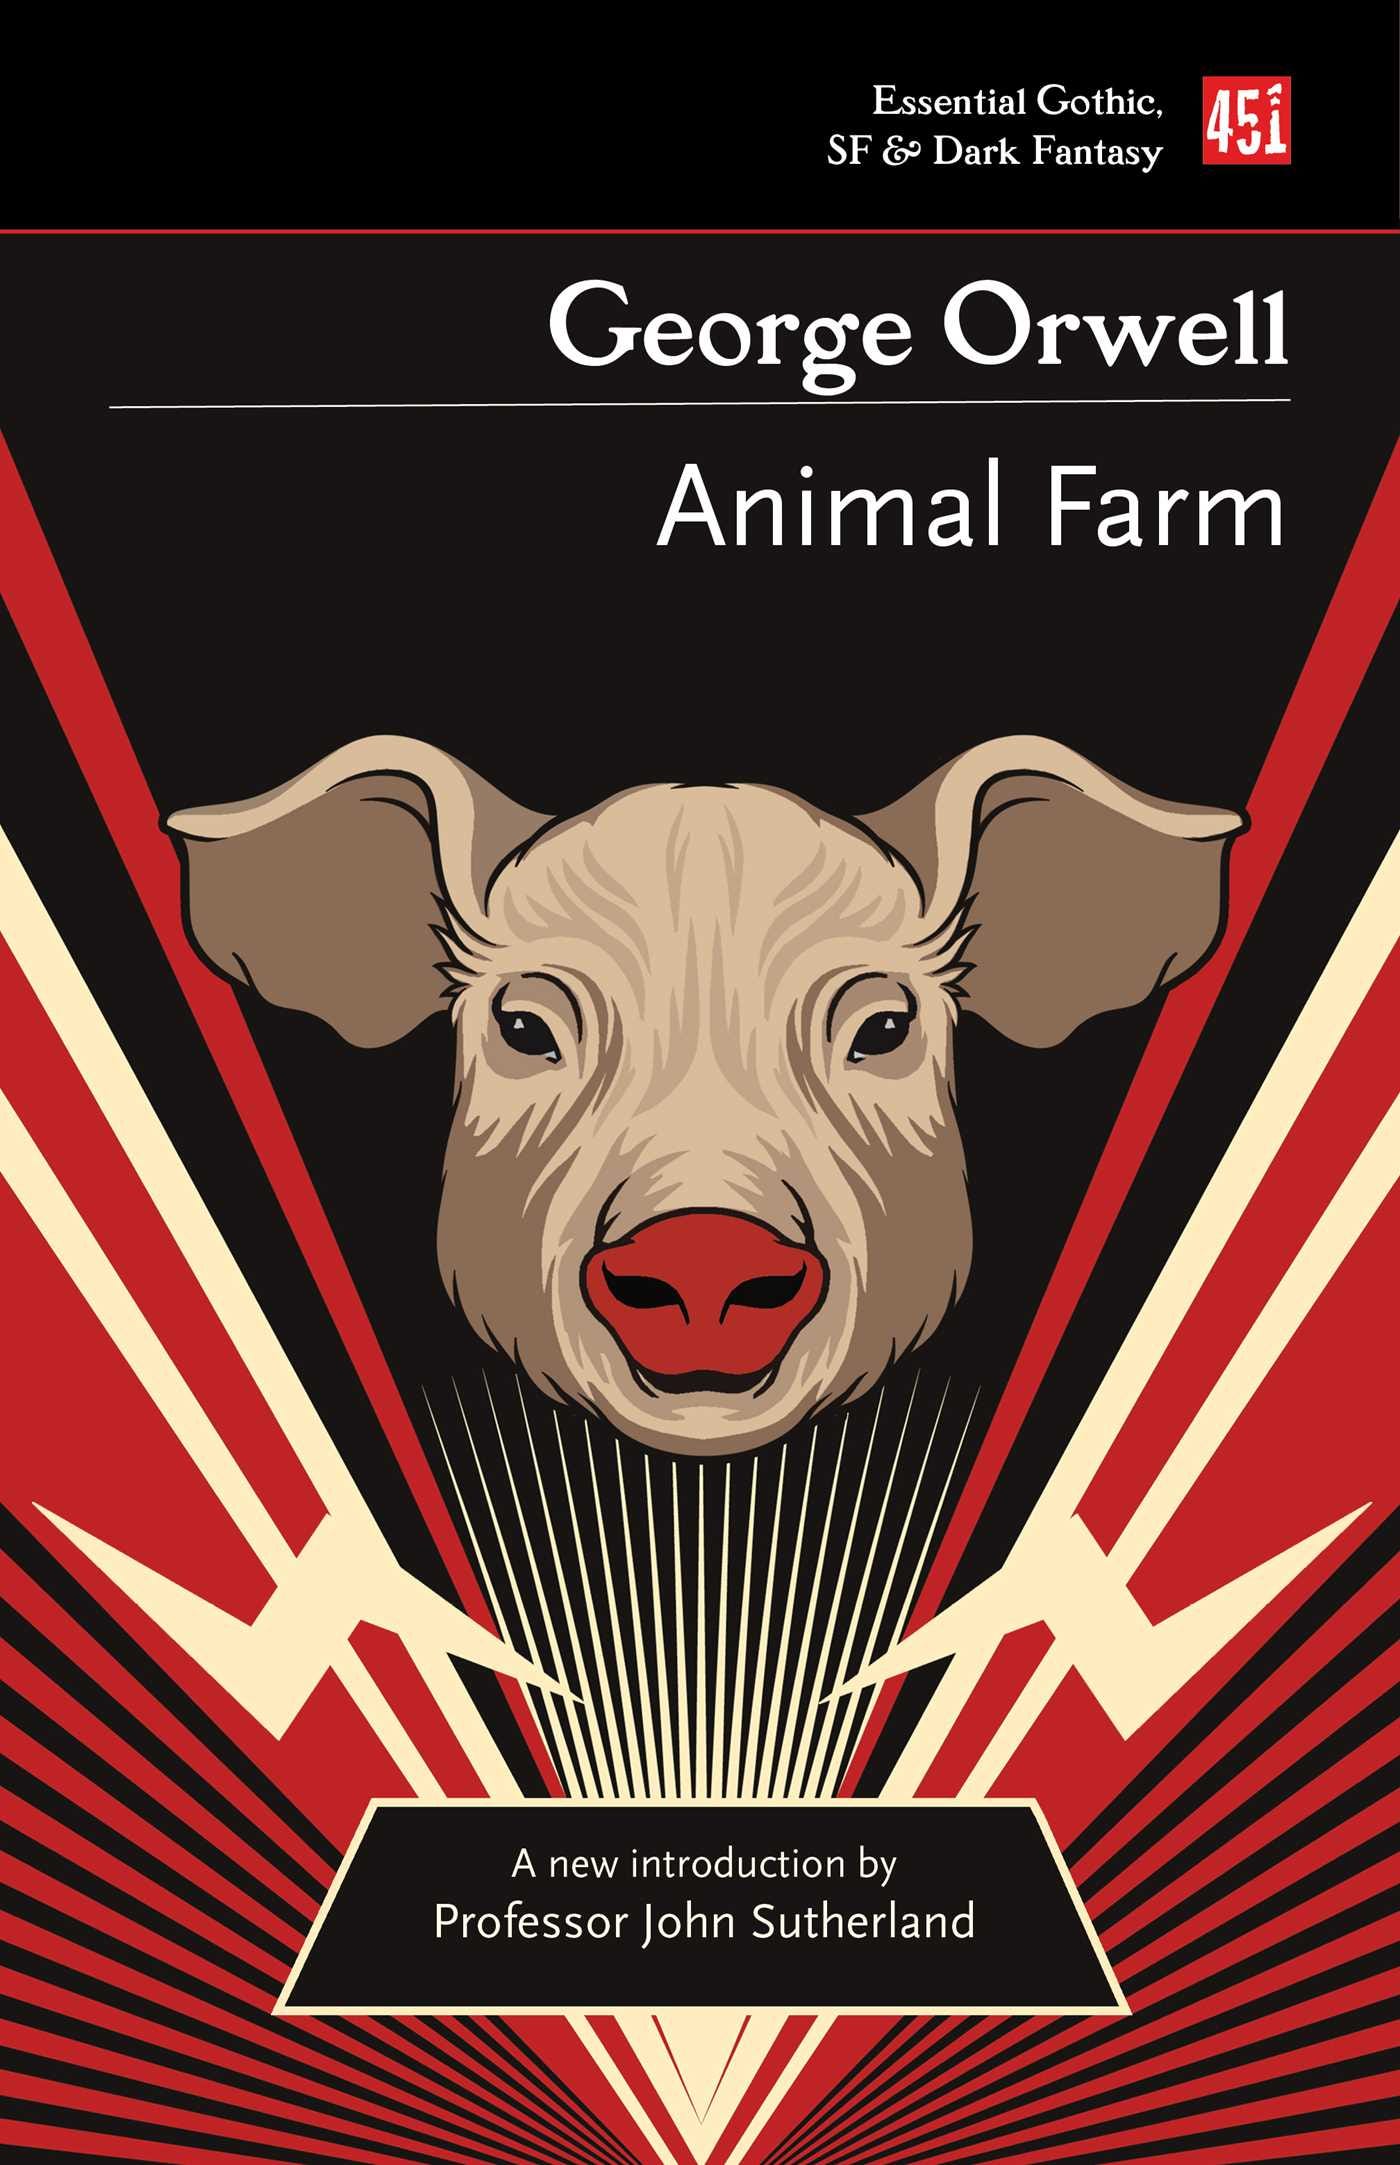 Animal Farm by George Orwell - Book Analysis